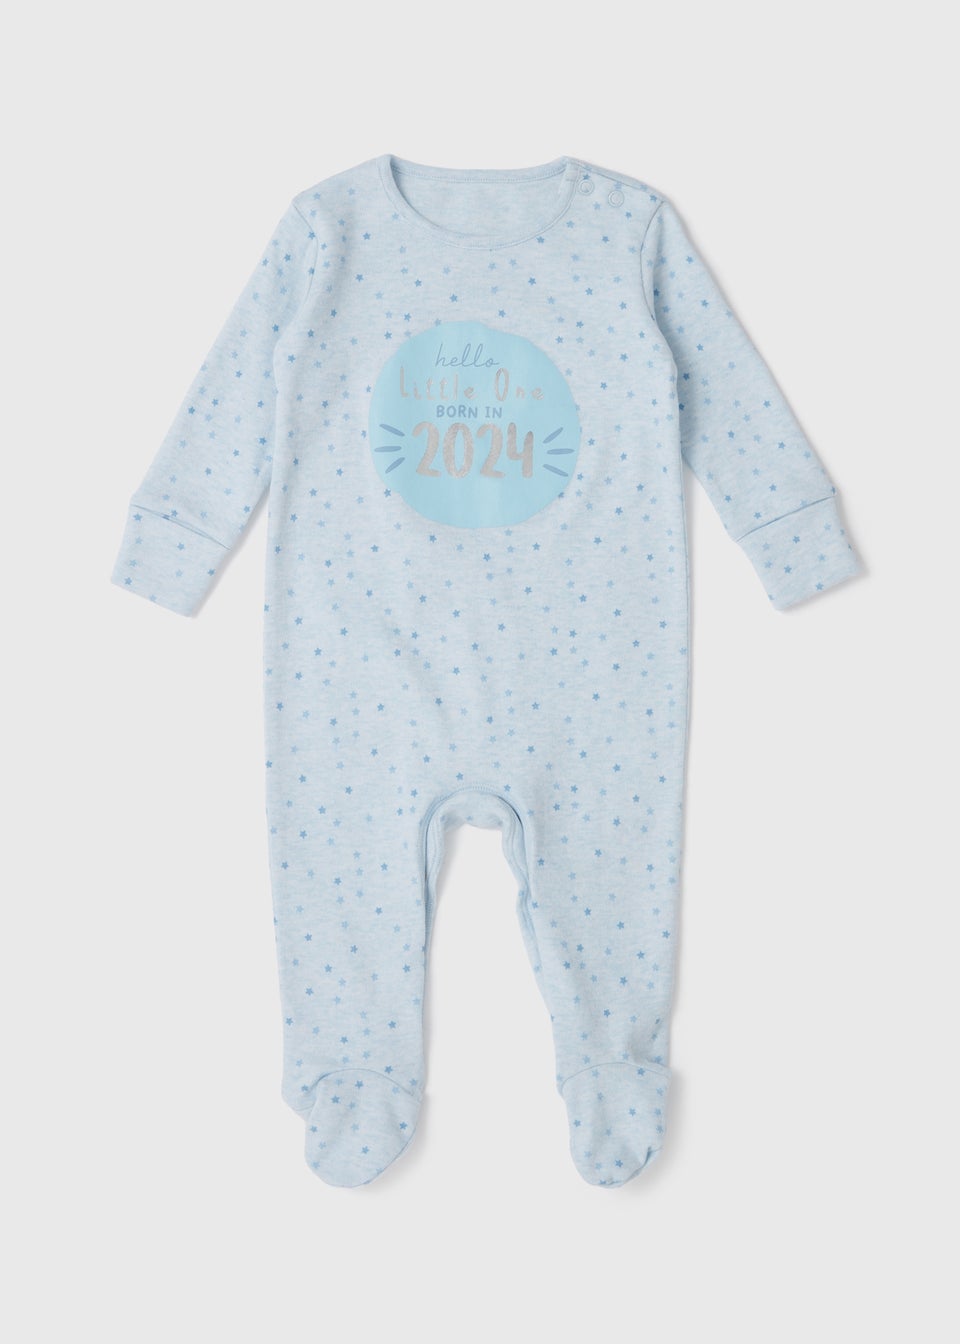 Baby Clothes Online  Shop All Babywear - Matalan